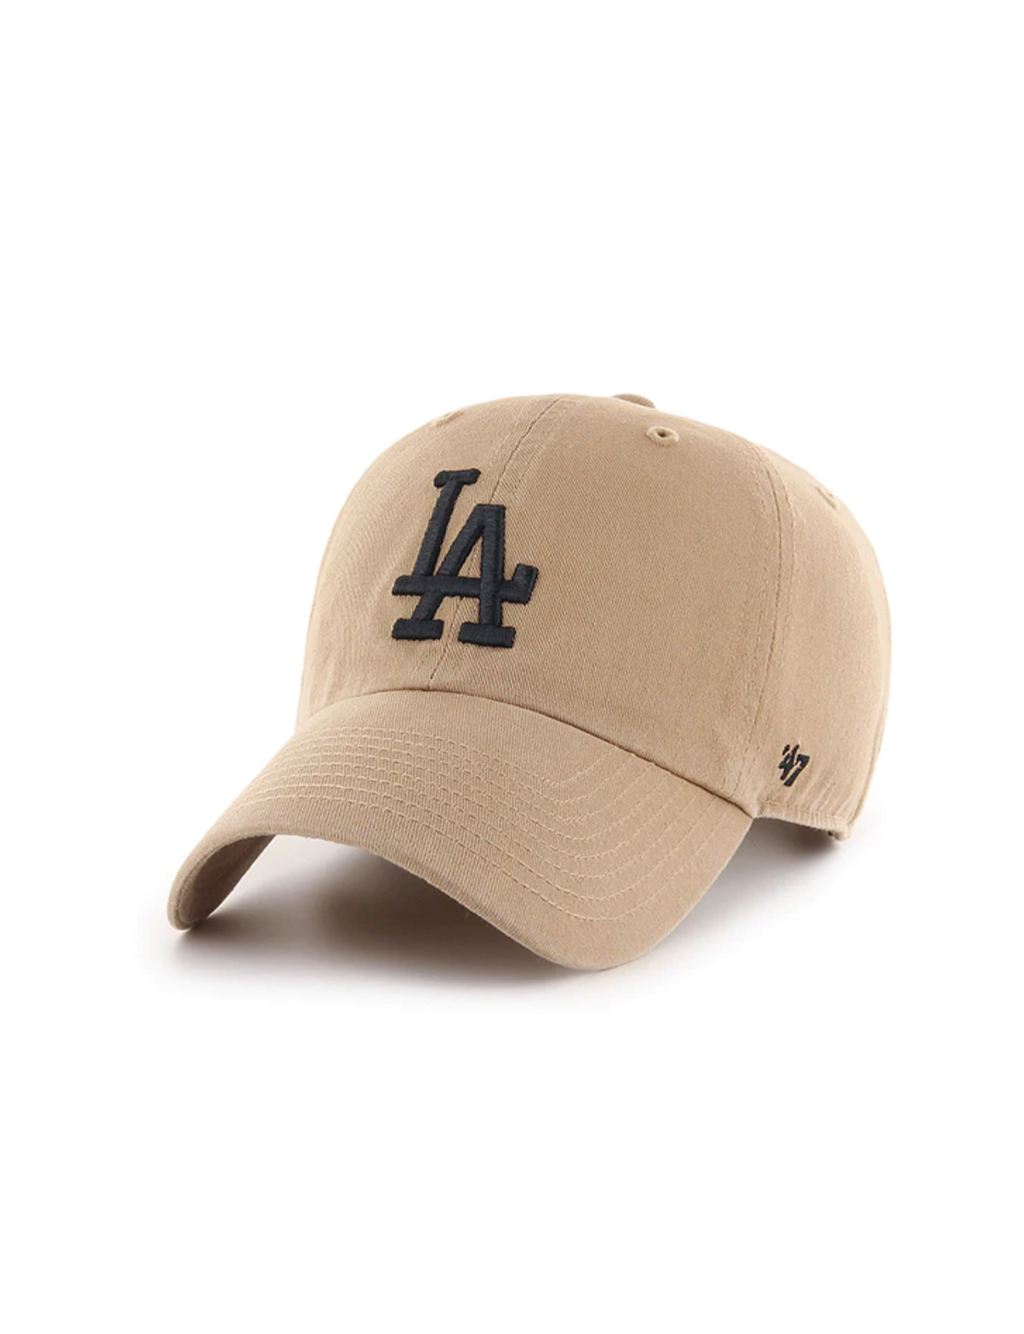 LA Dodgers Basic Ball Cap, Khaki/Black